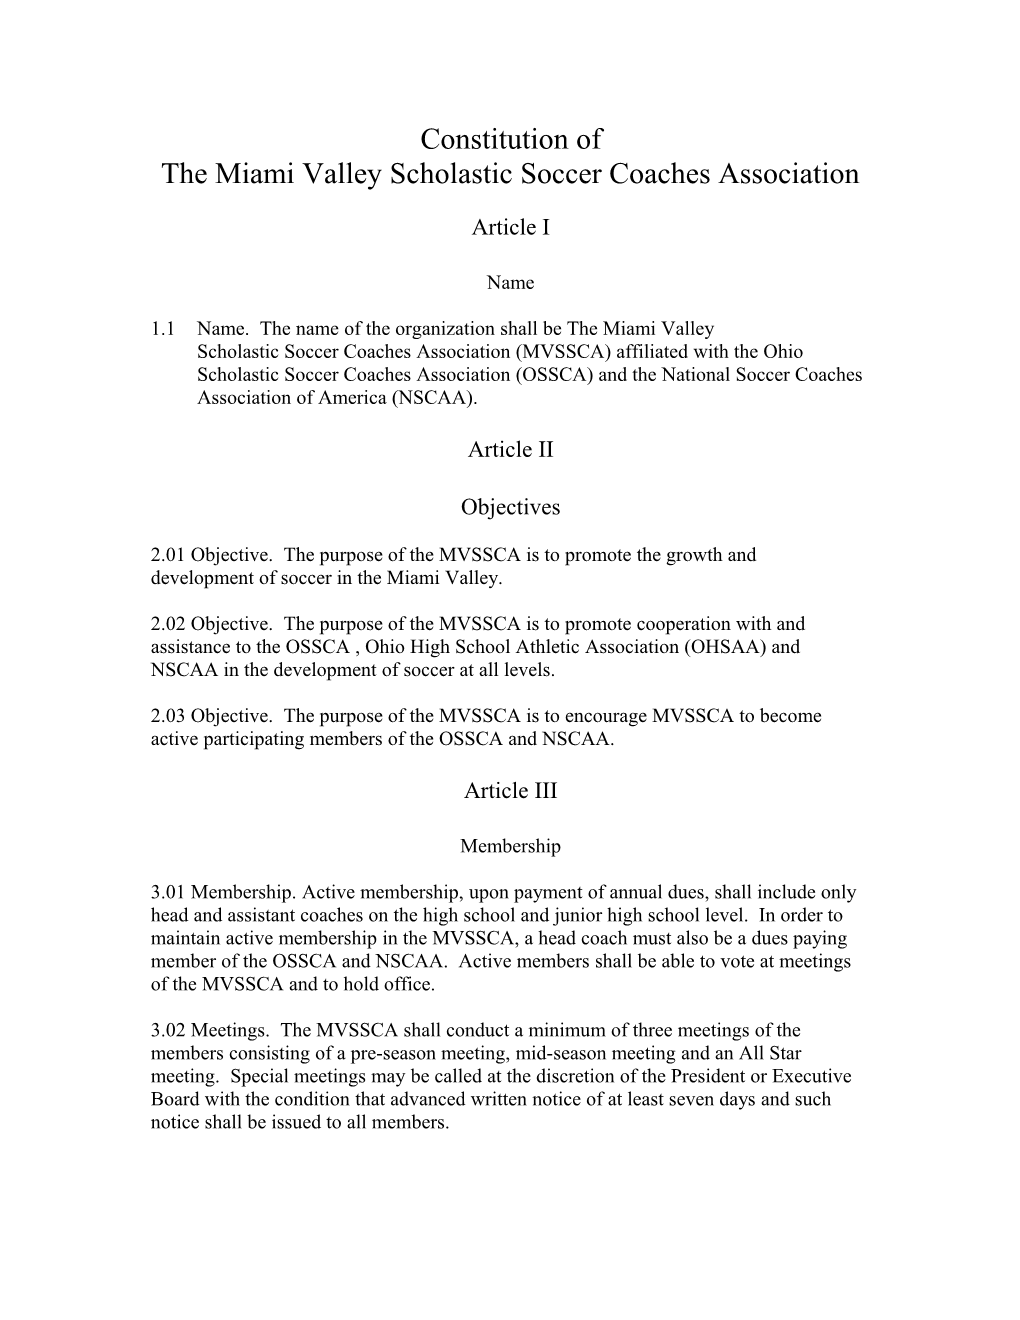 The Miami Valley Scholastic Soccer Coaches Association